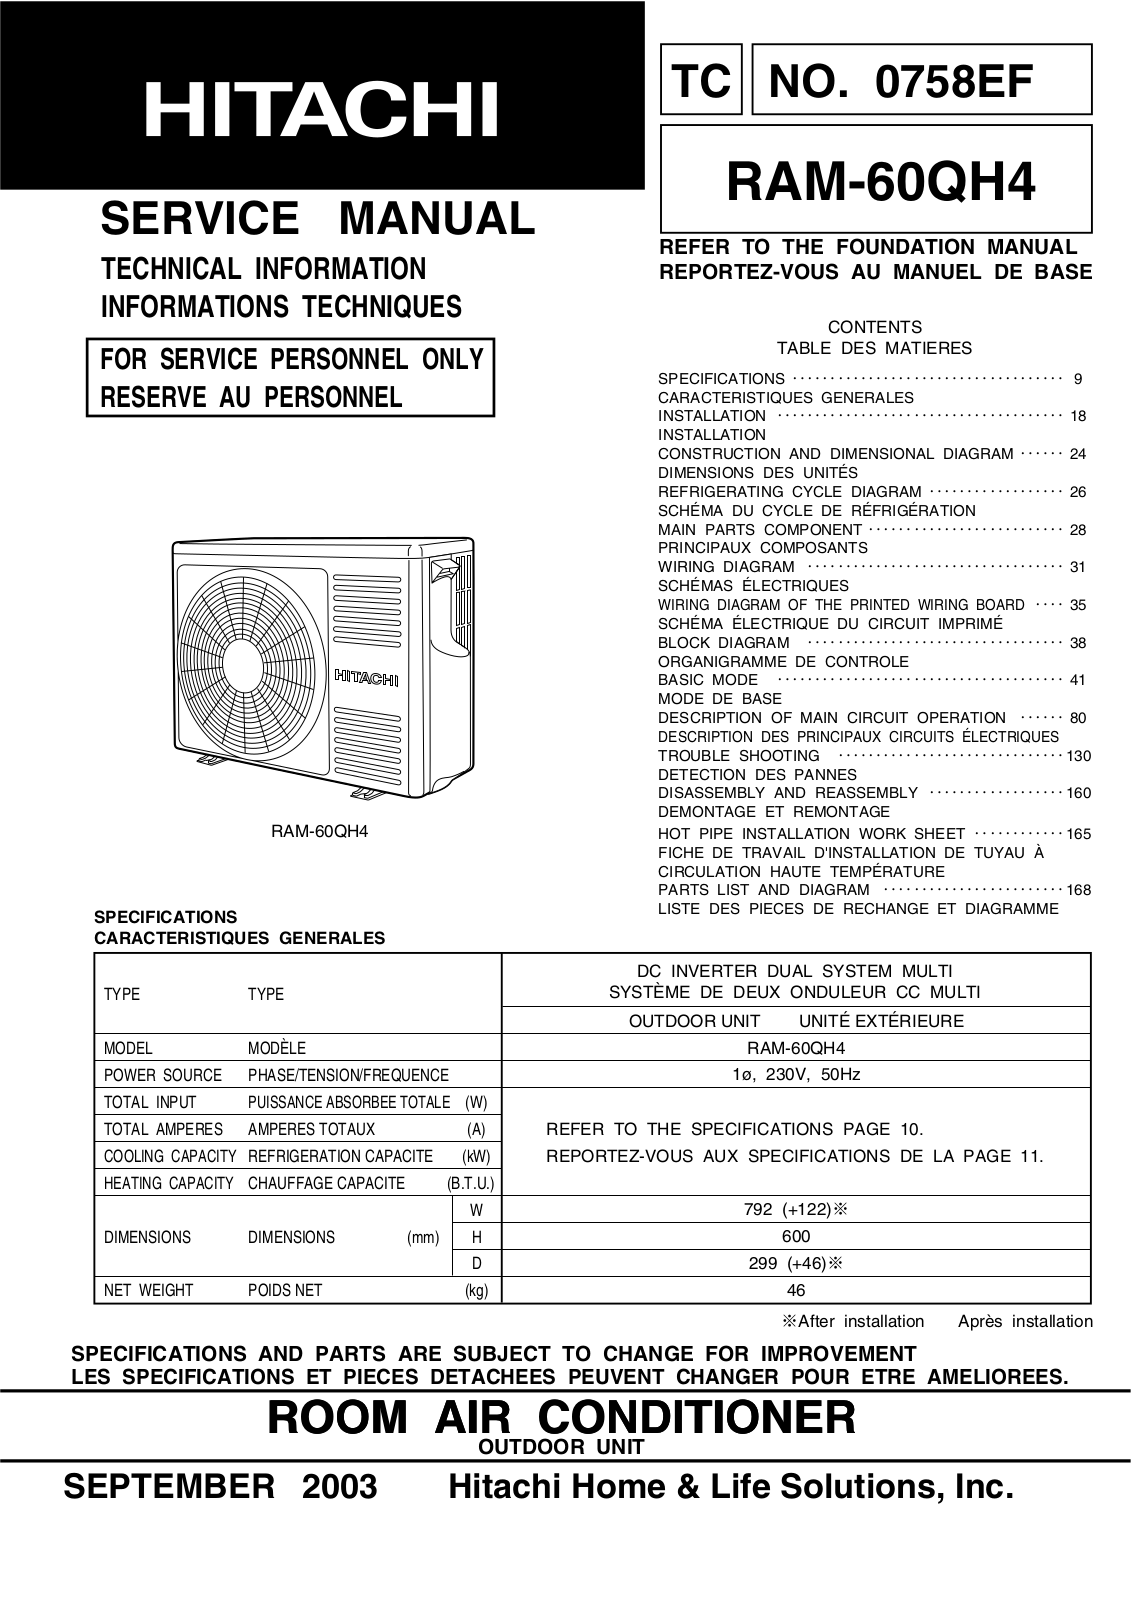 Hitachi RAM-60QH4 Service Manual